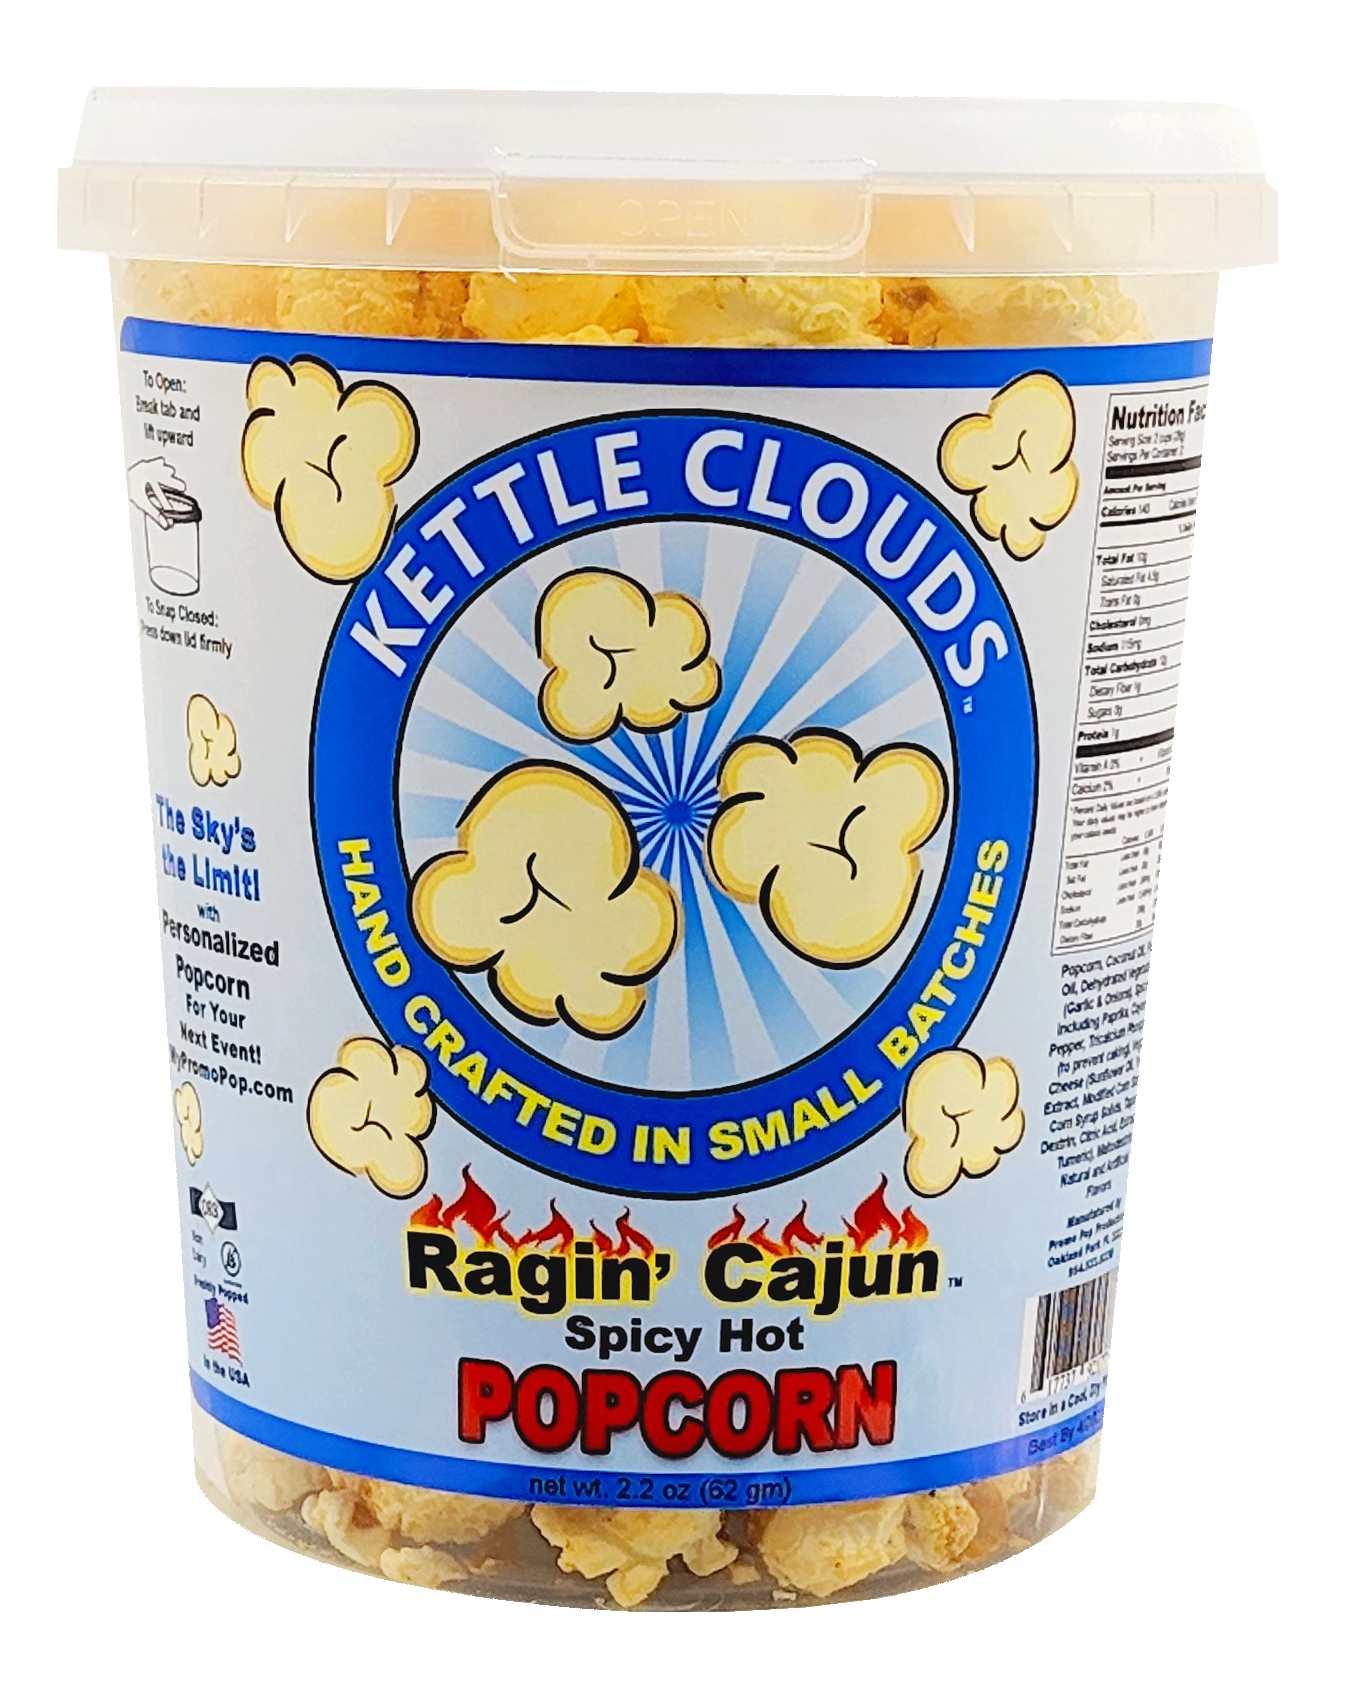 Kettle Clouds™ - Ragin' Cajun Classic (as low as $4.49 per bucket) Case of 12 Price